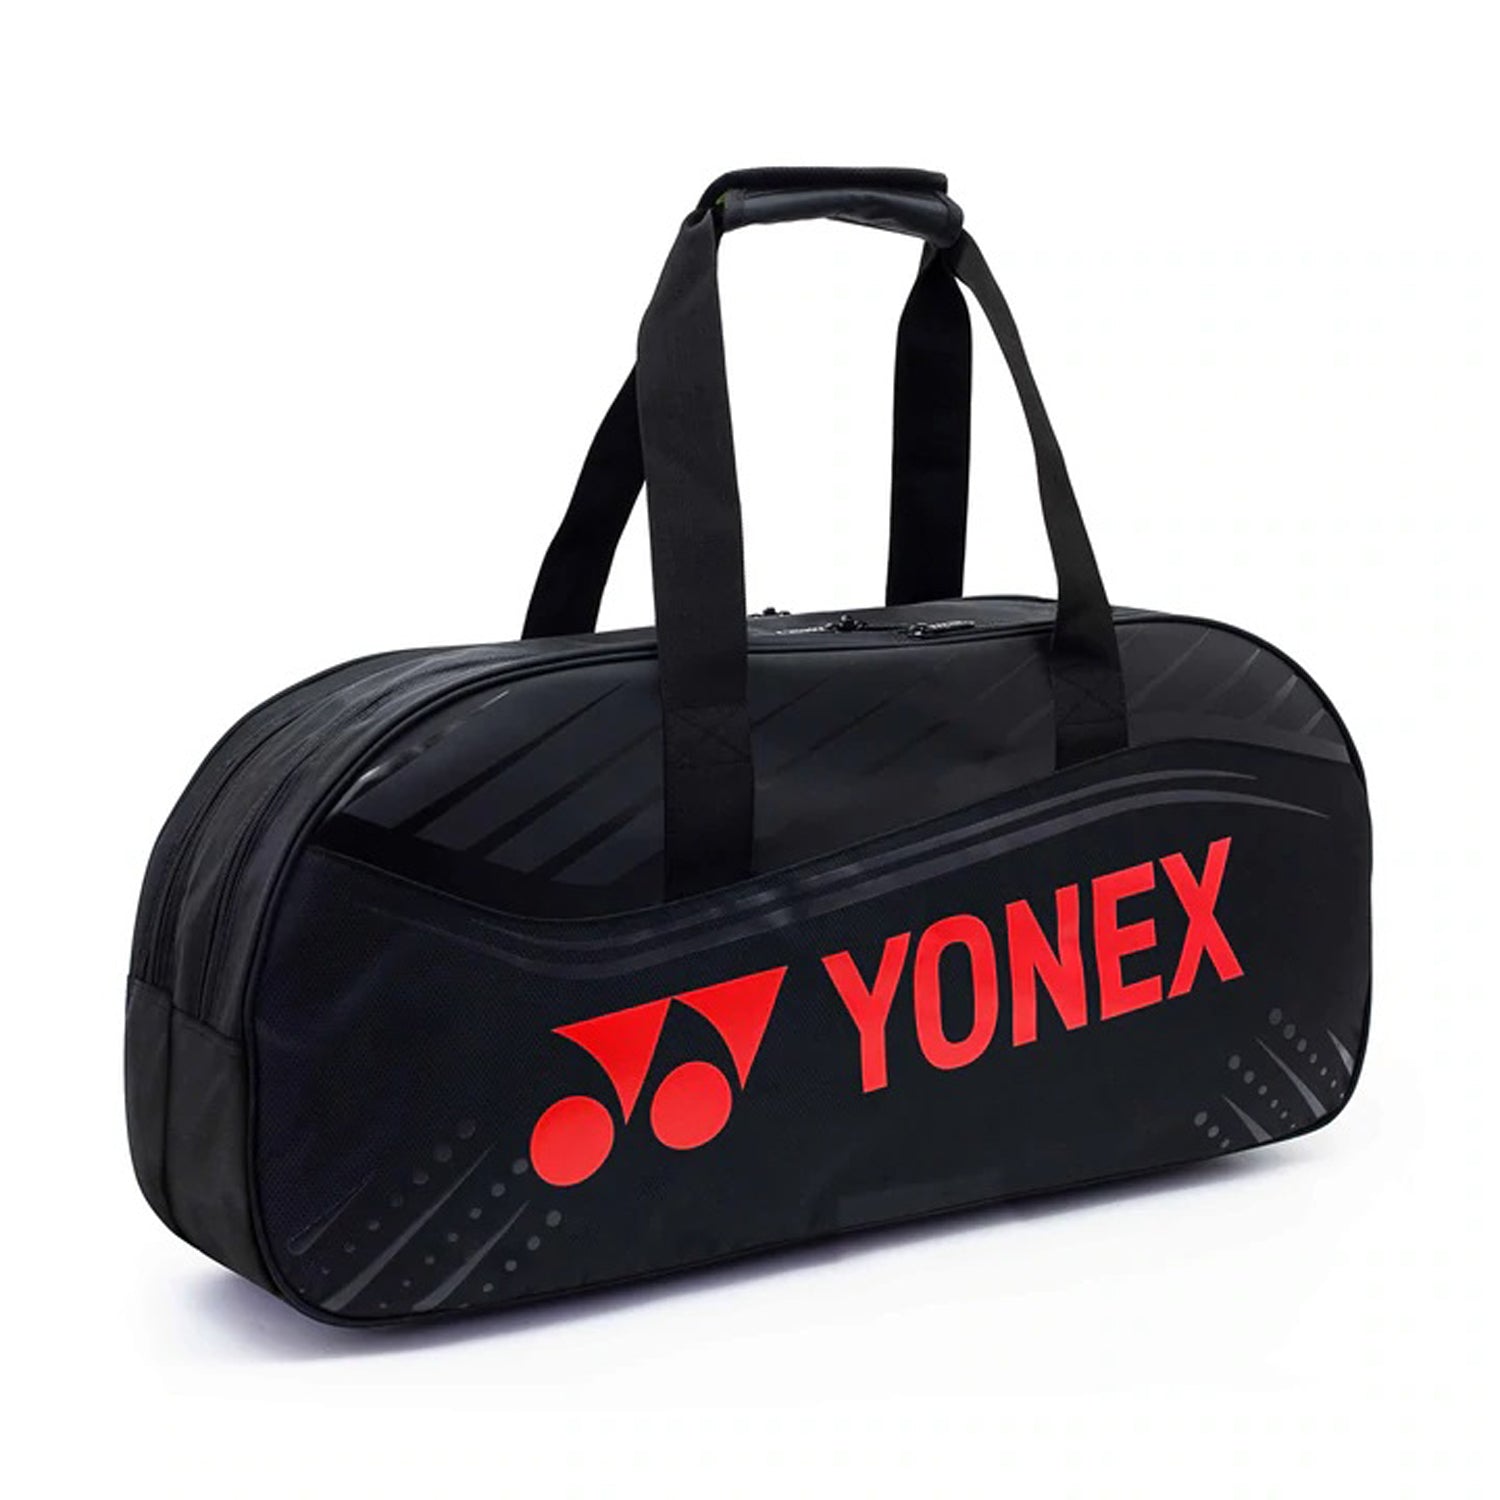 Yonex 2231 Badminton Tournament Bag ,Black/Warm Red